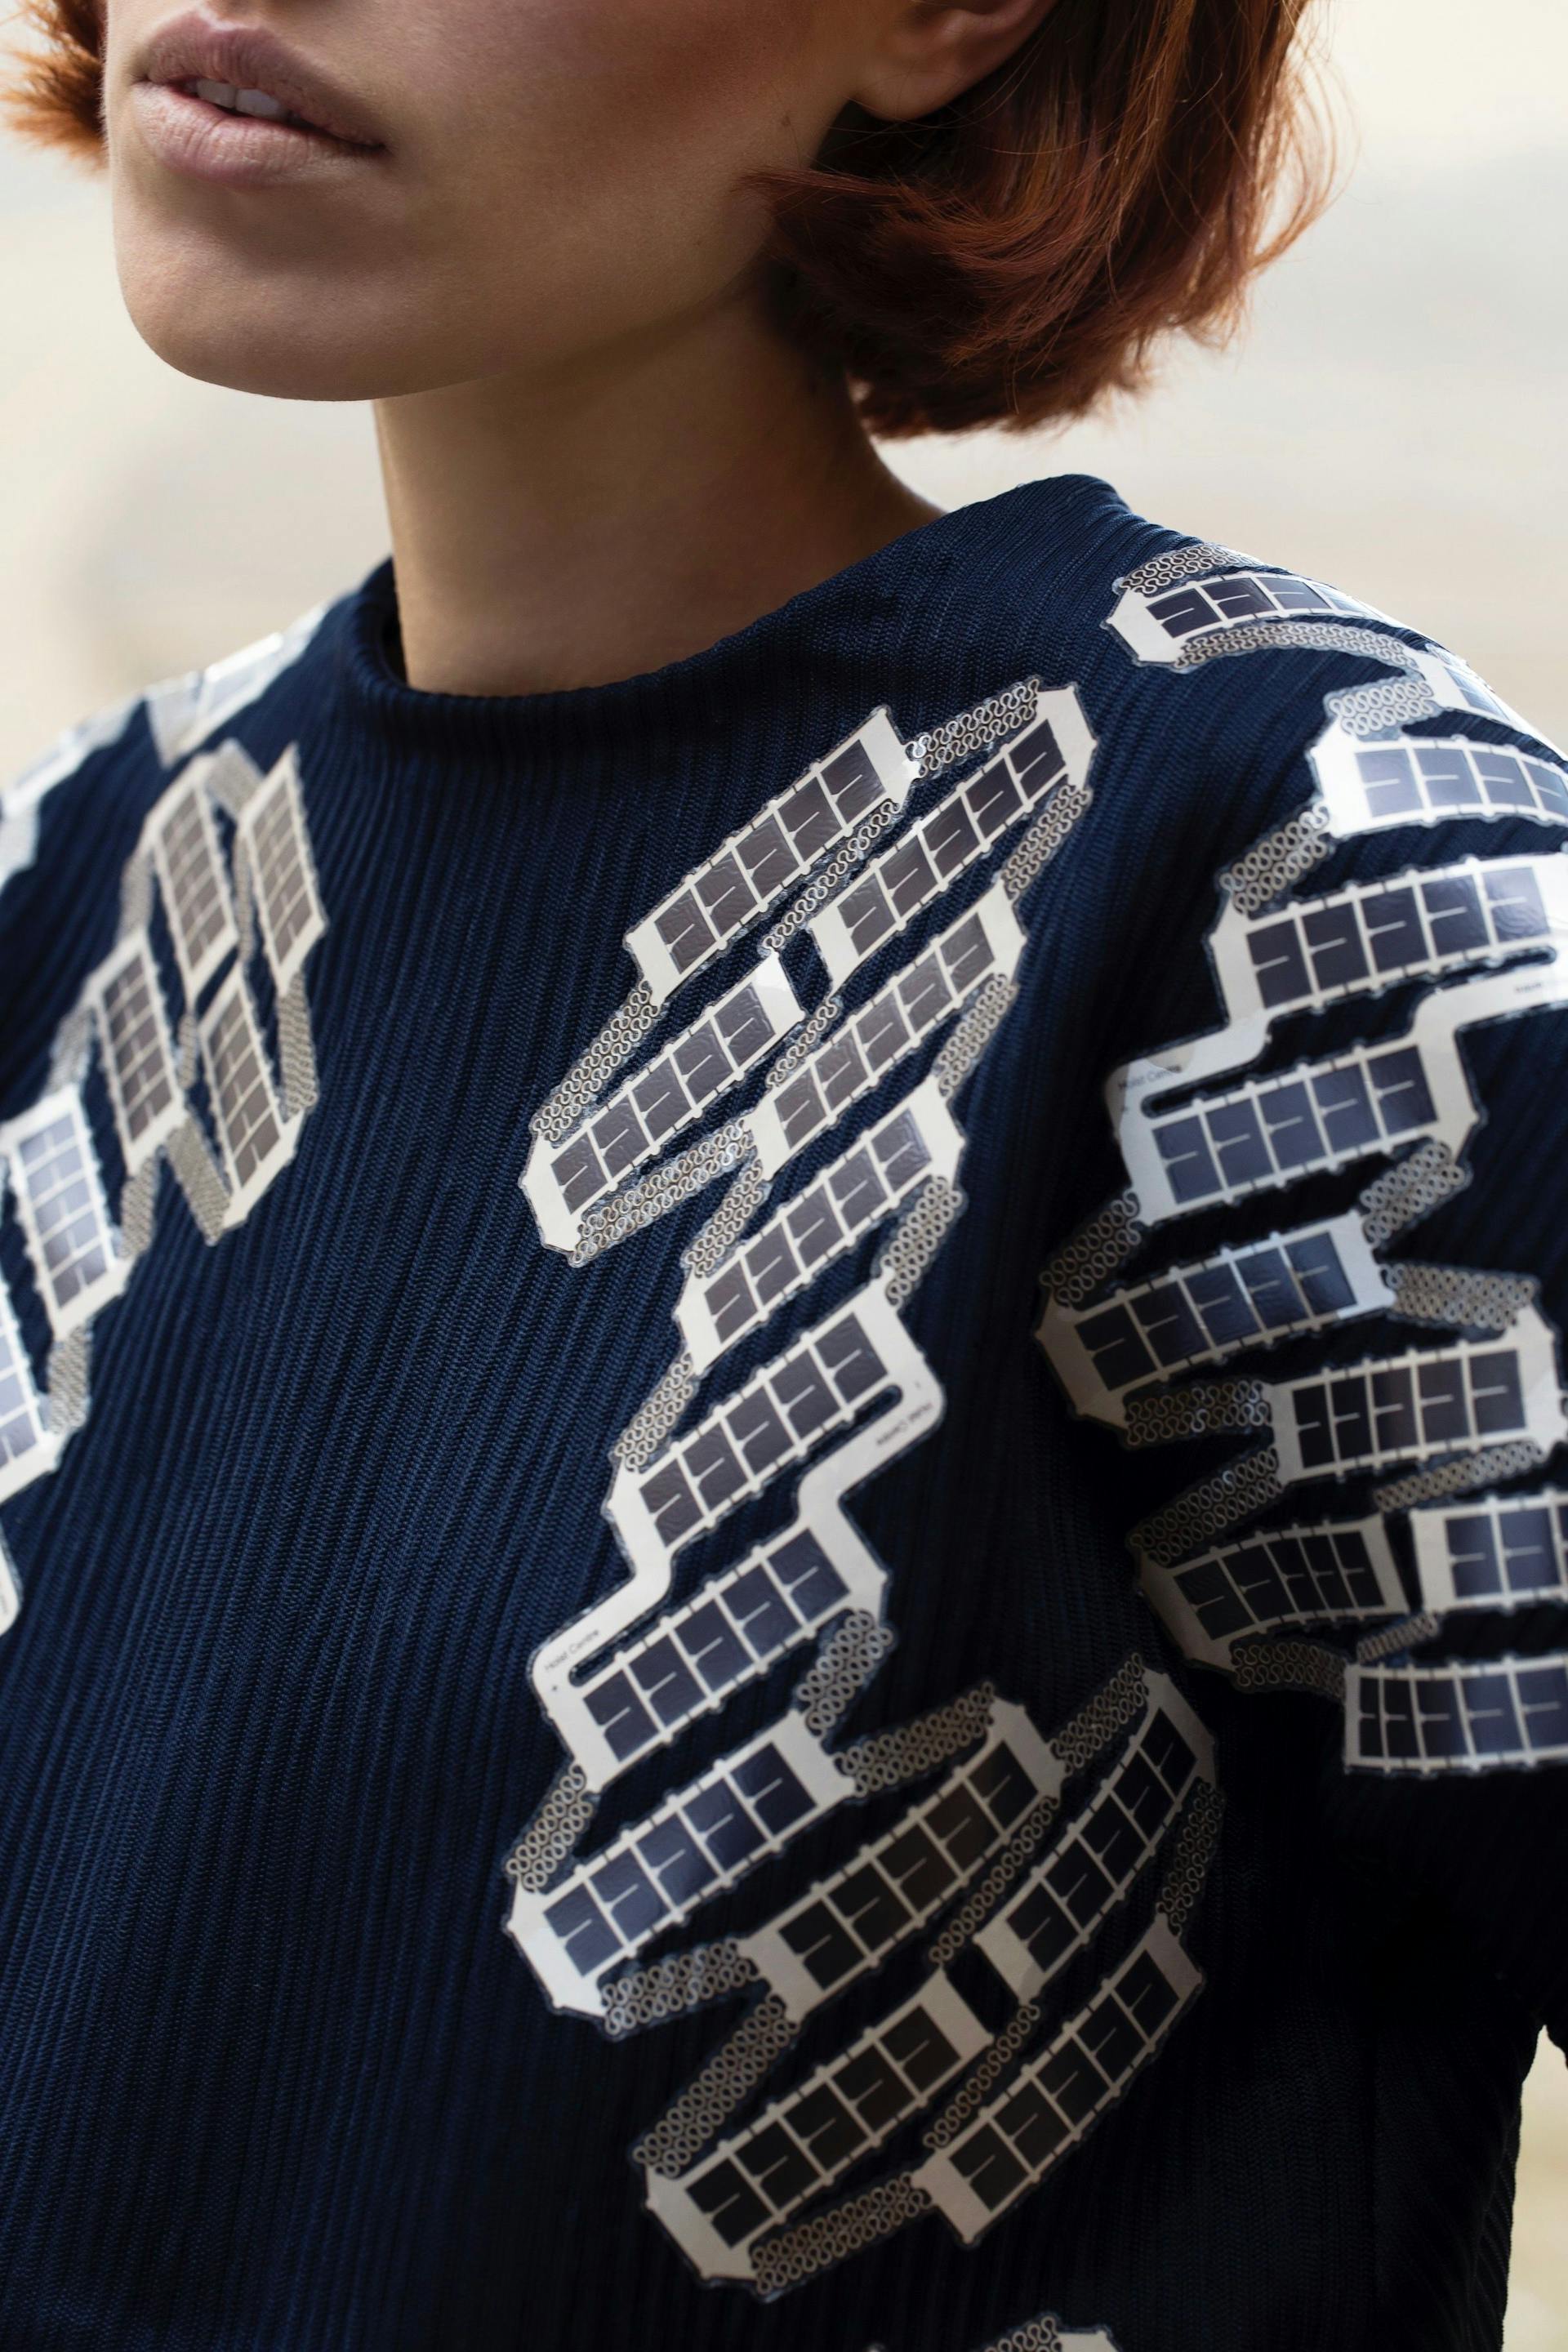 Solar Shirt by Pauline van Dongen. Photo: Liselotte Fleur.